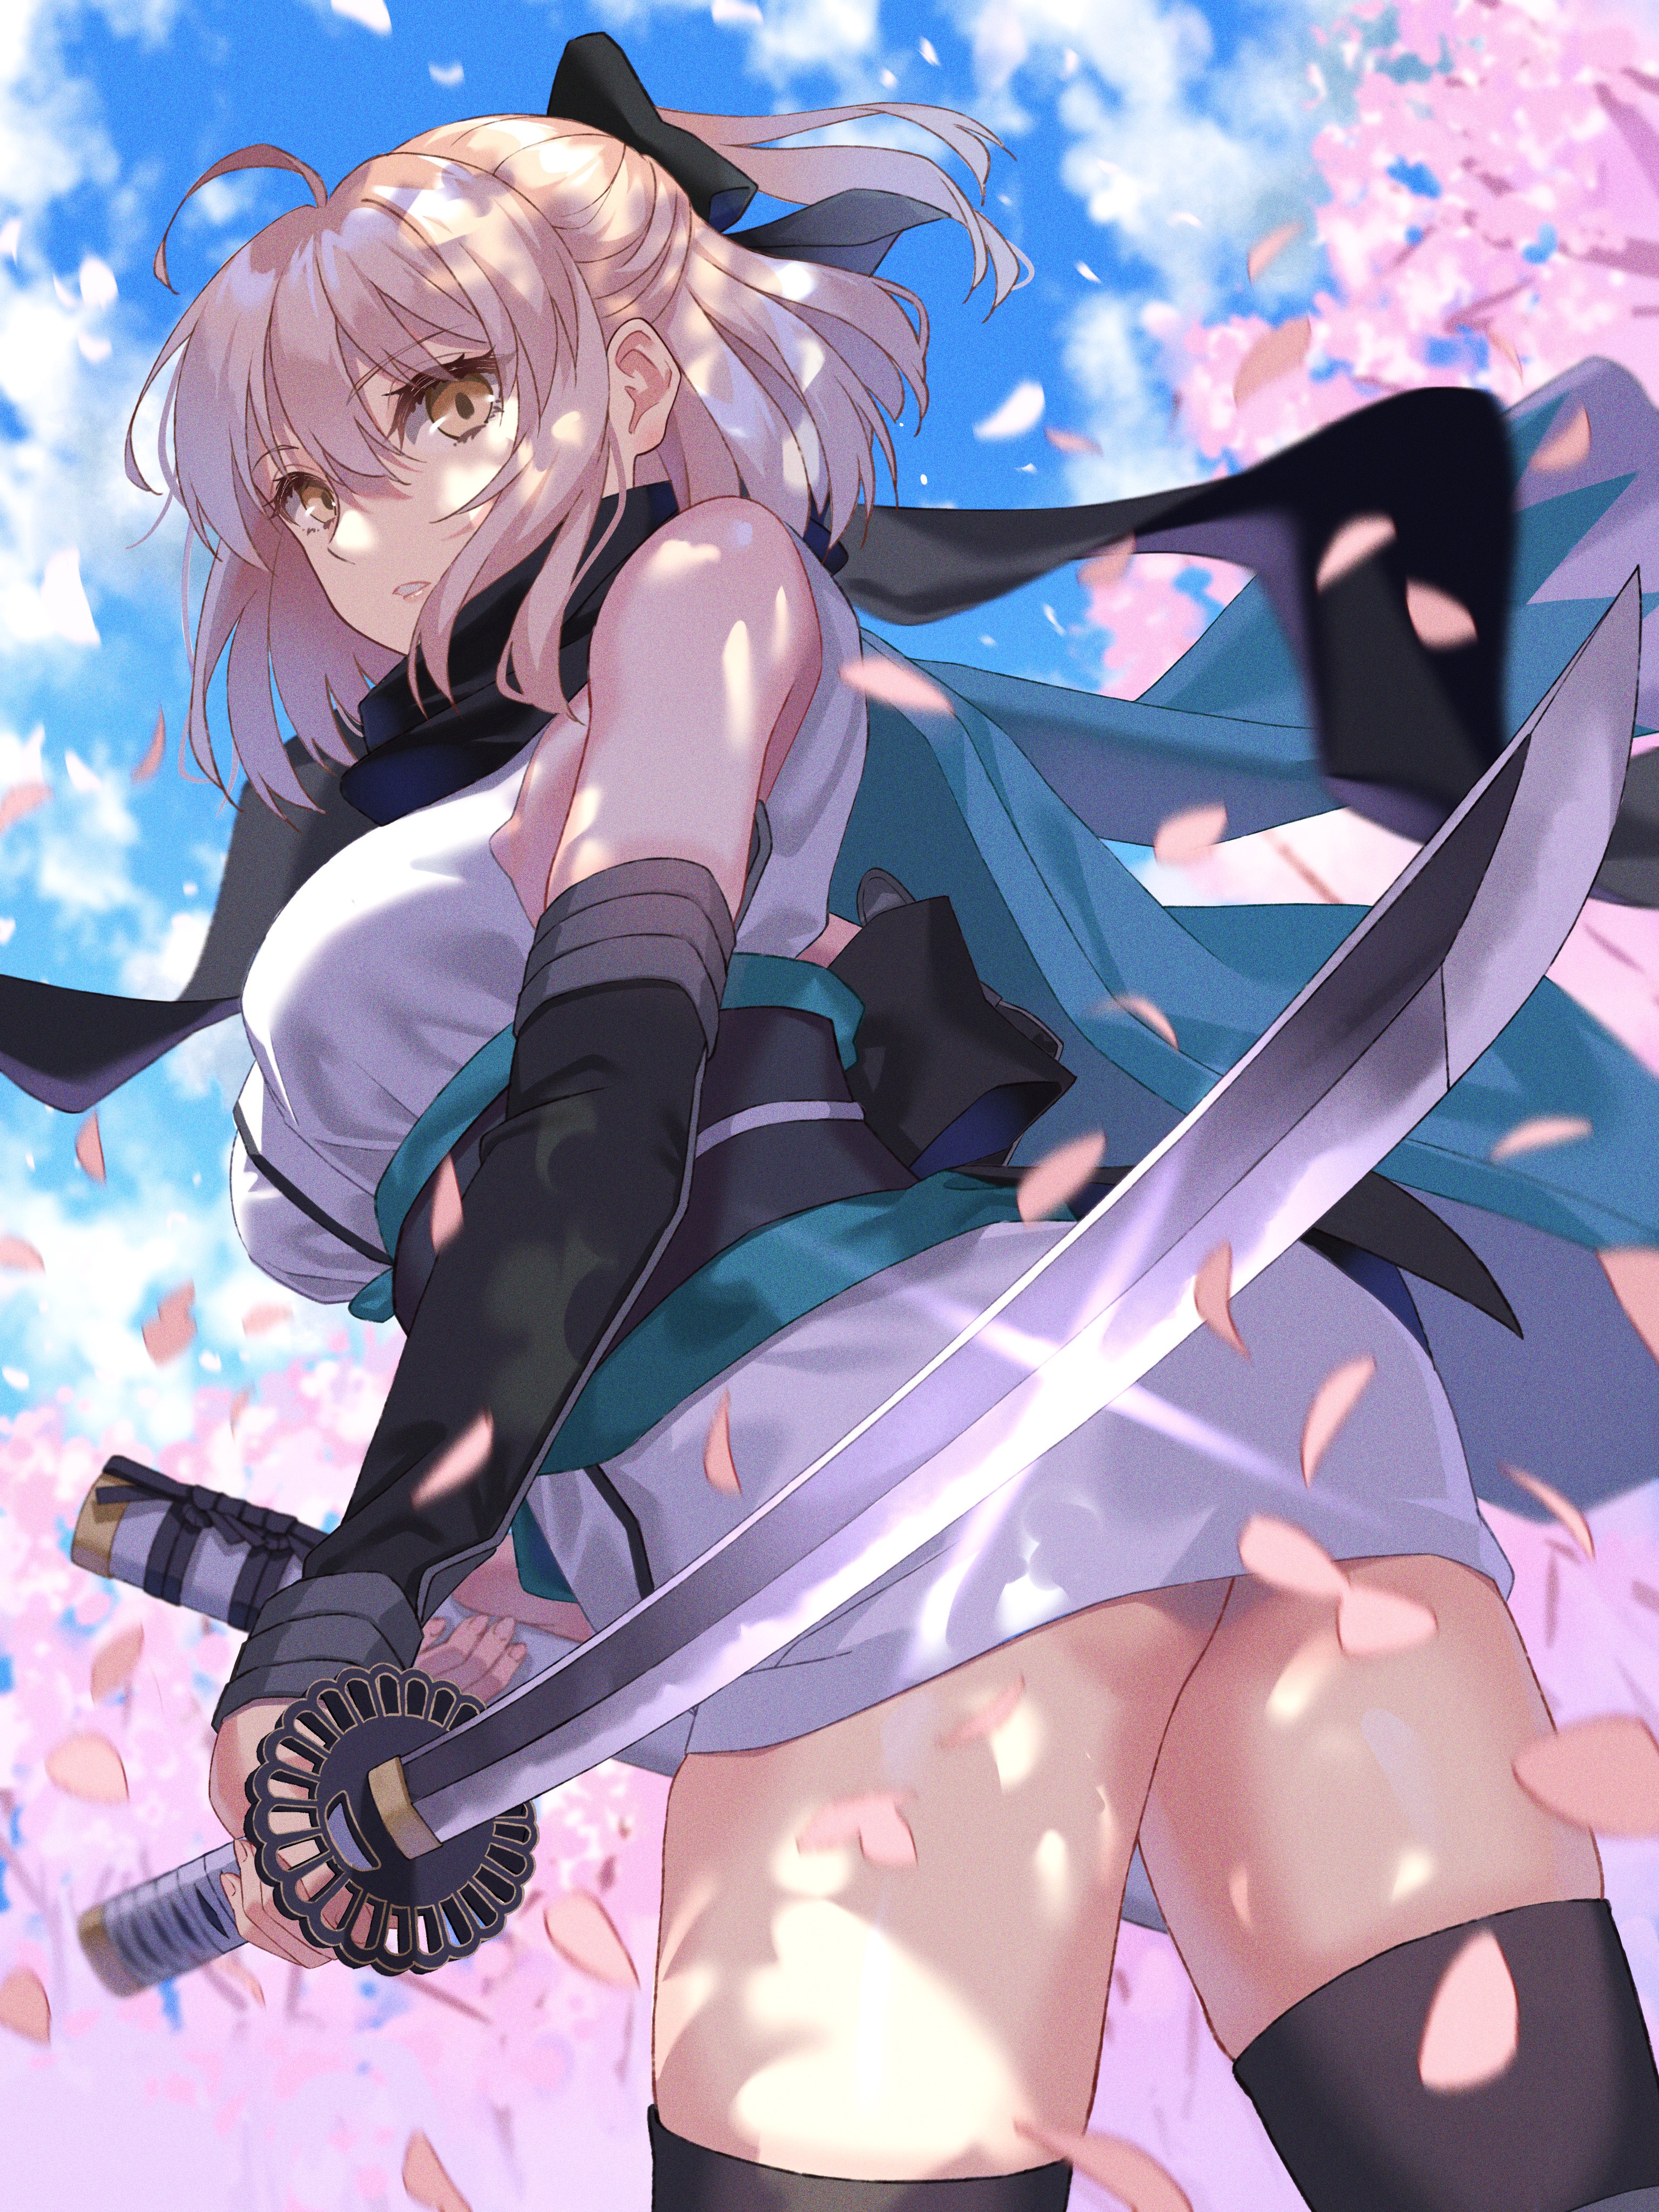 Anime 3072x4096 anime anime girls Fate series Fate/Grand Order Okita Souji boobs katana sword artwork digital art fan art